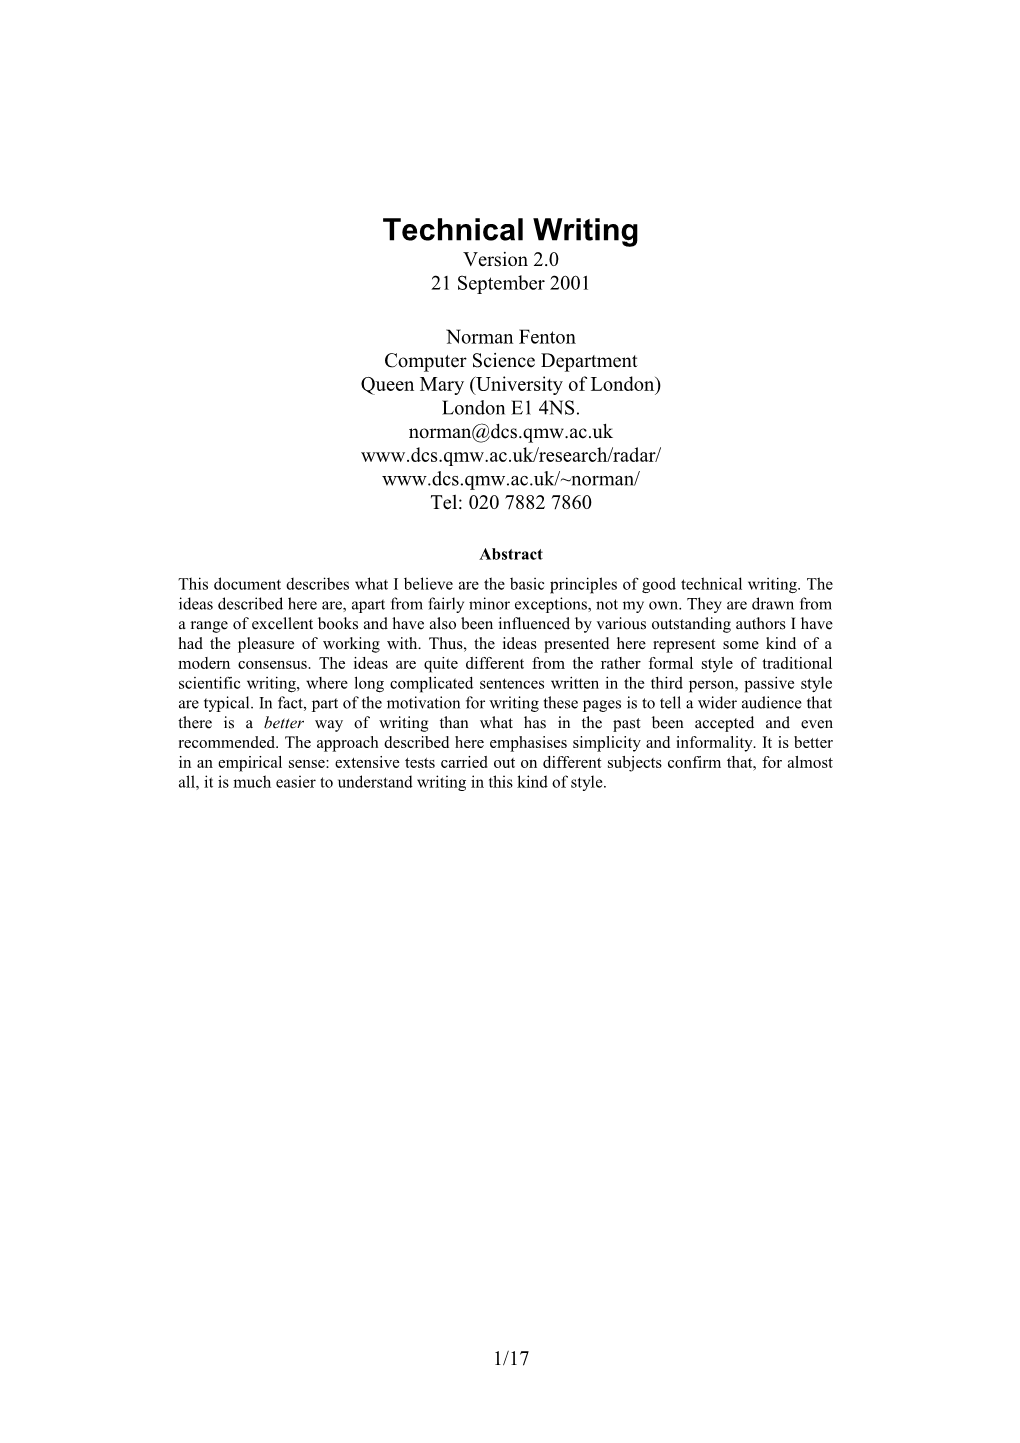 Technical Writinglsa/E10061railtrack Task Number SASA03 Version 2.0, 21 September 20011.01